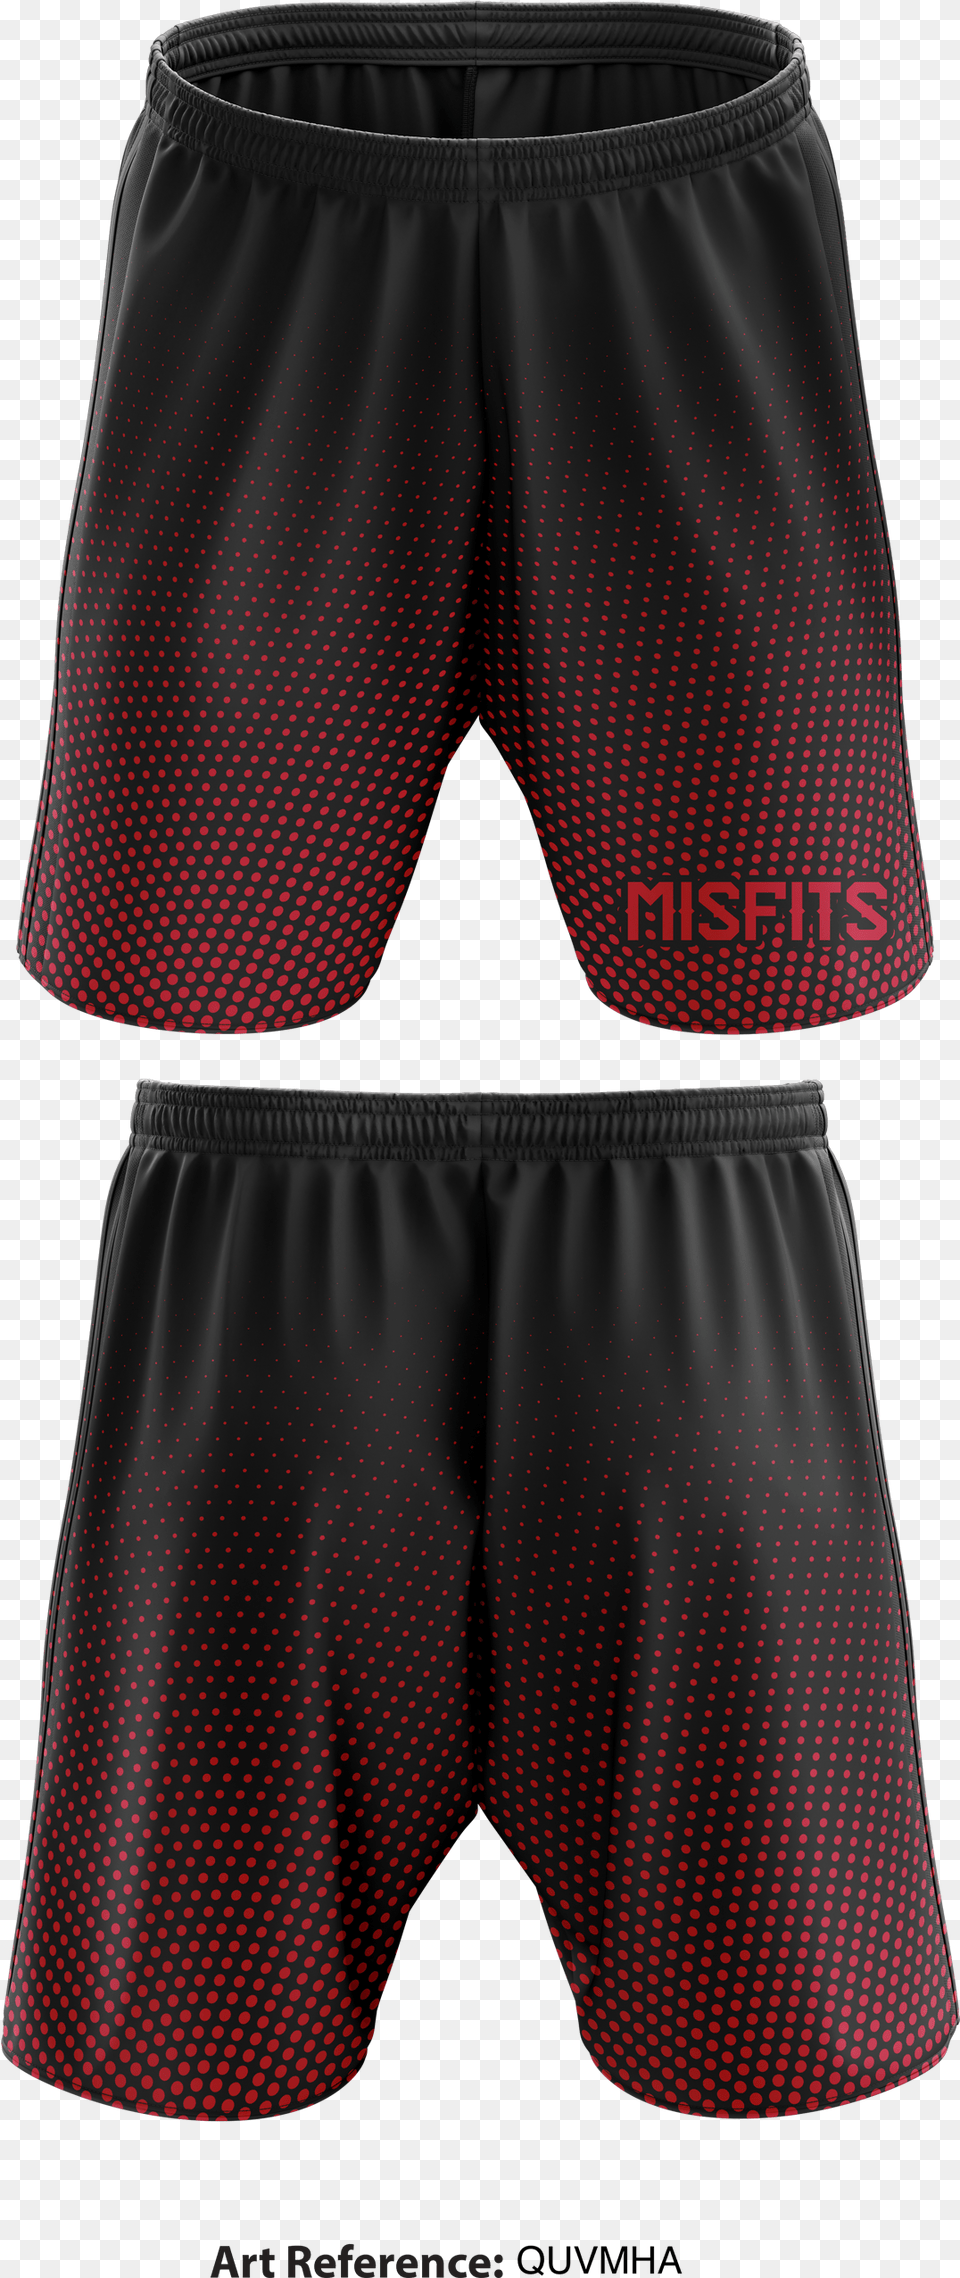 Misfits Softball Athletic Shorts Gym Shorts, Clothing, Skirt, Swimming Trunks Png Image